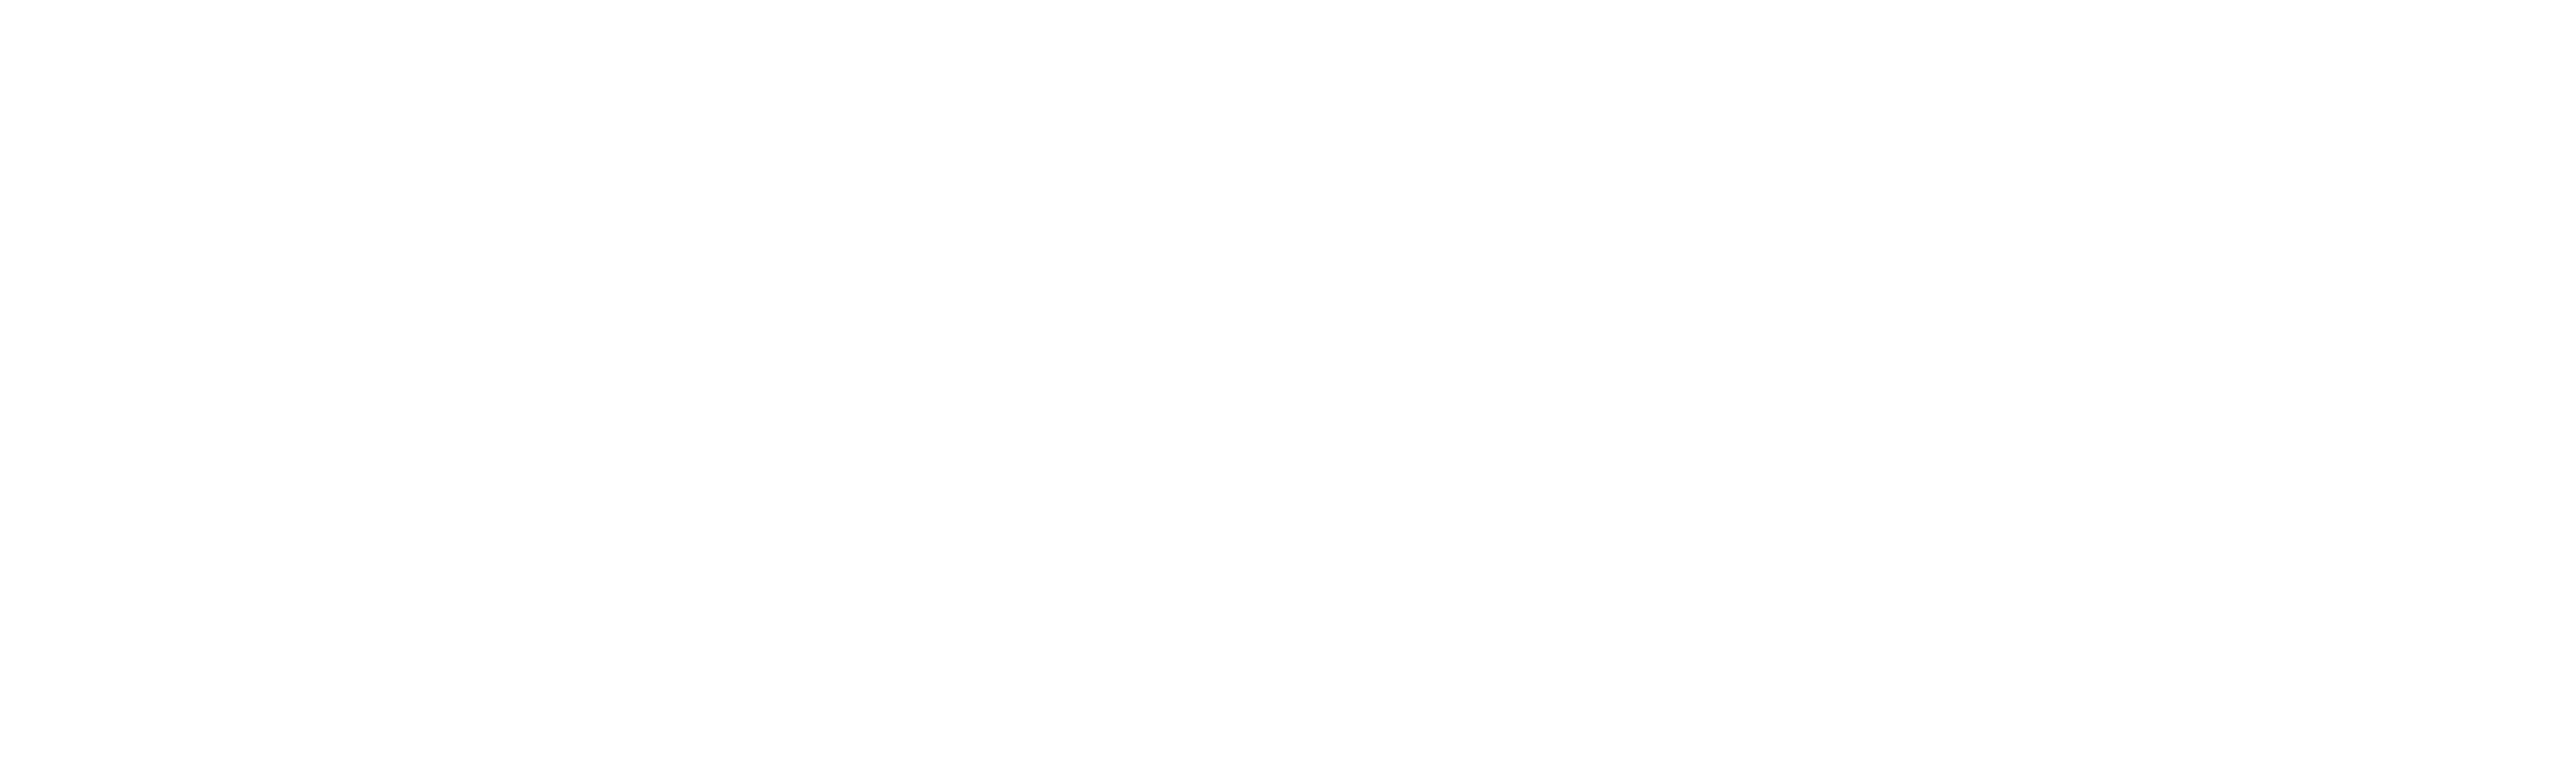 Portal Tierras